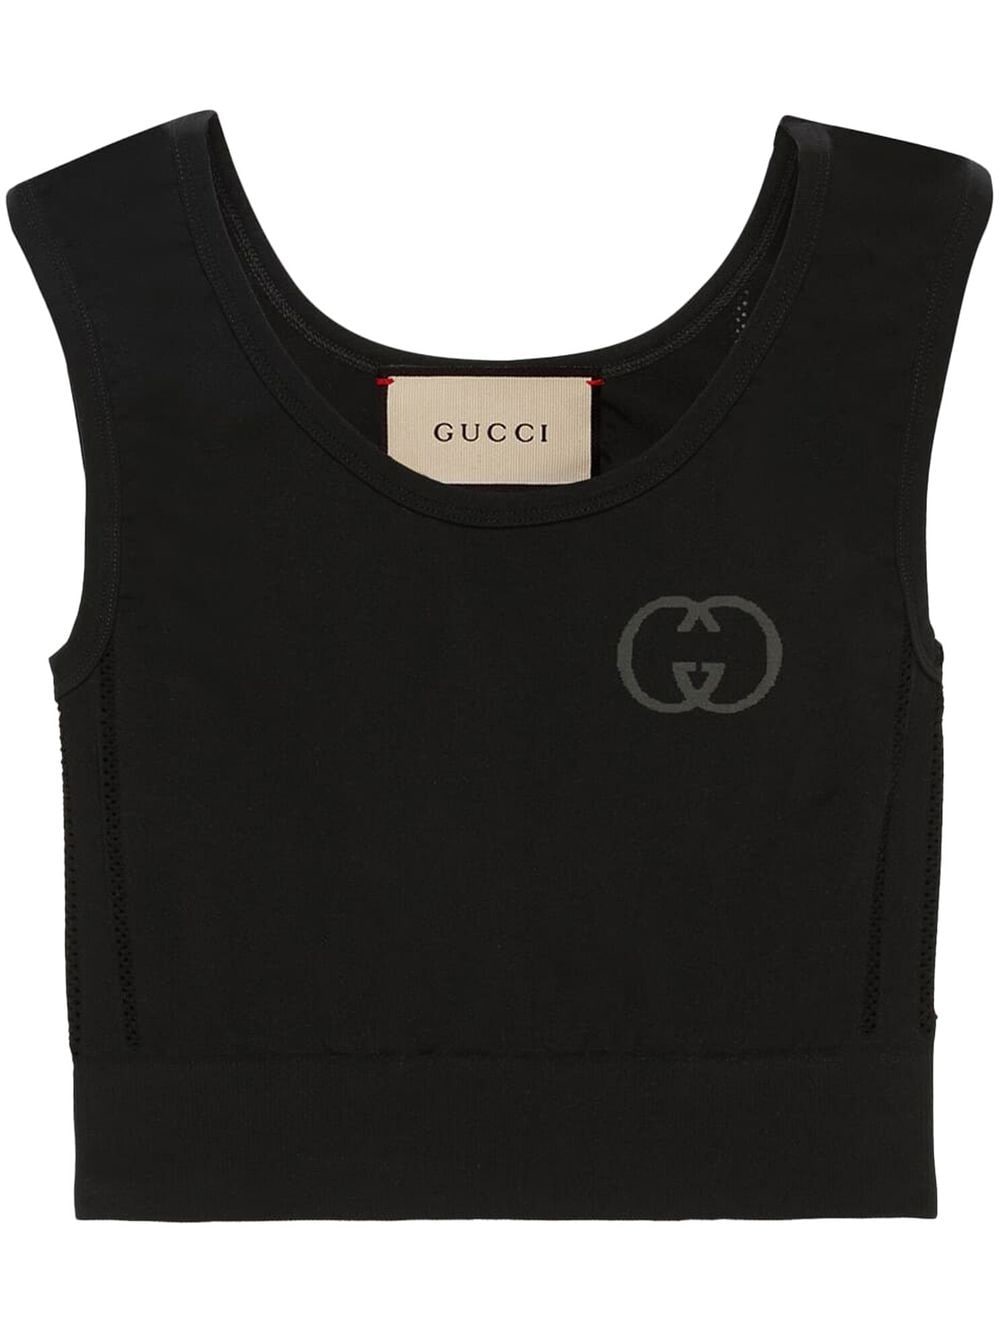 Gucci Interlocking G Cropped Vest Top - Farfetch